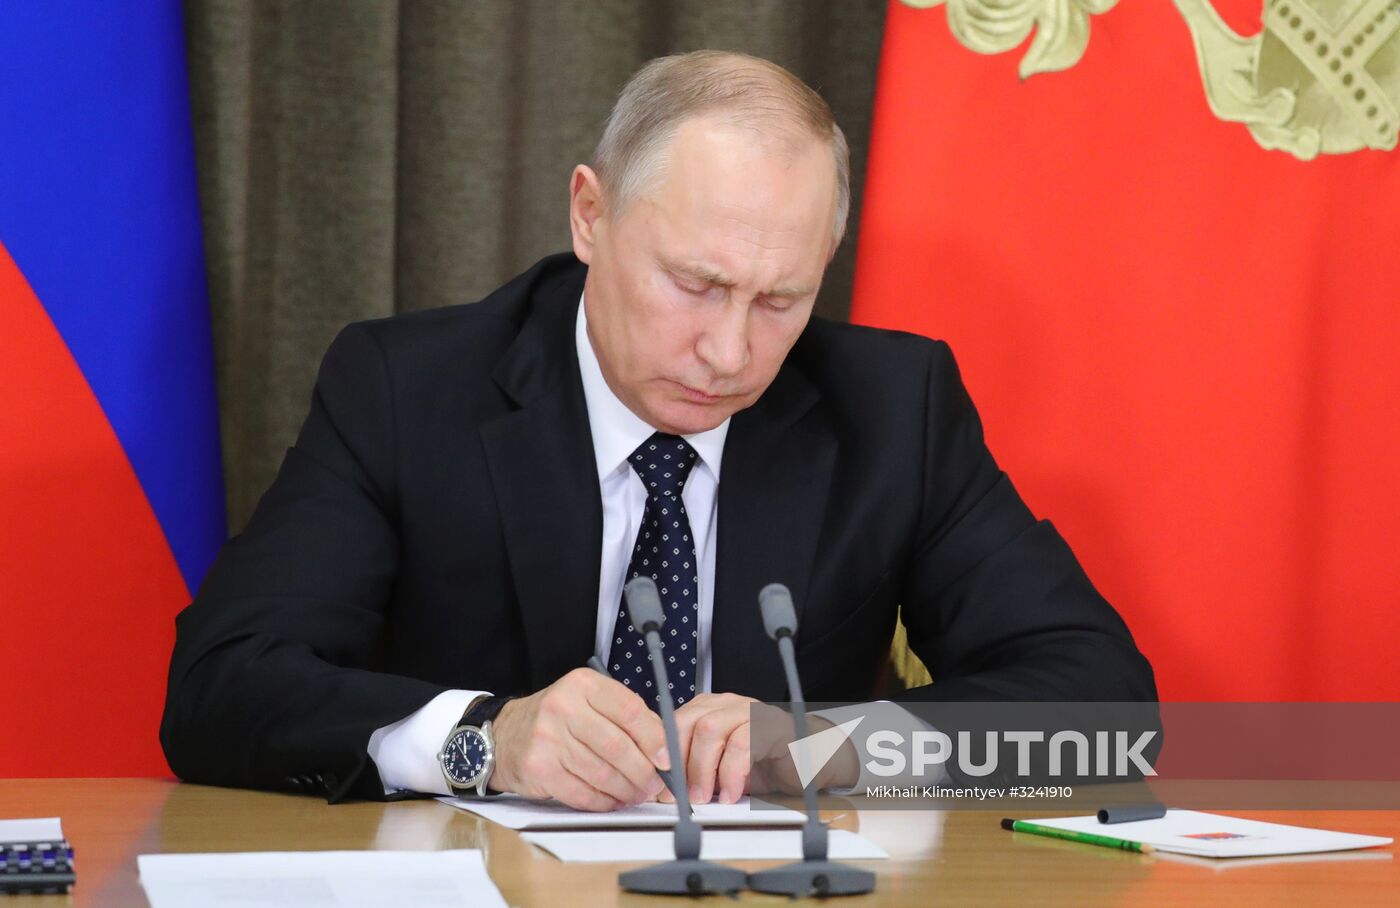 President Putin chairs meeting on army modernization